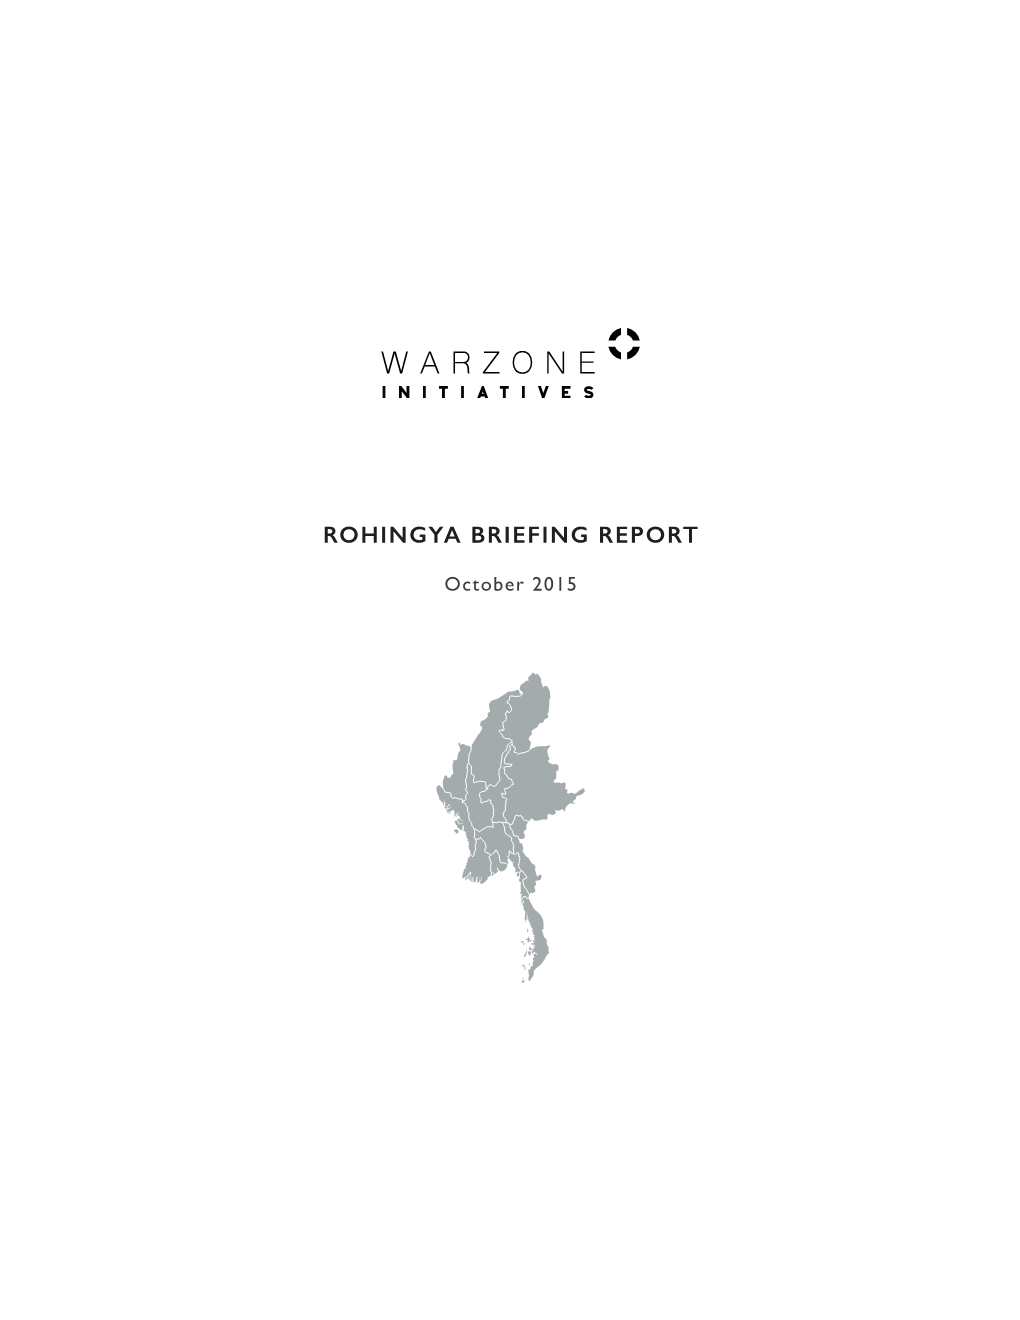 Rohingya Briefing Report